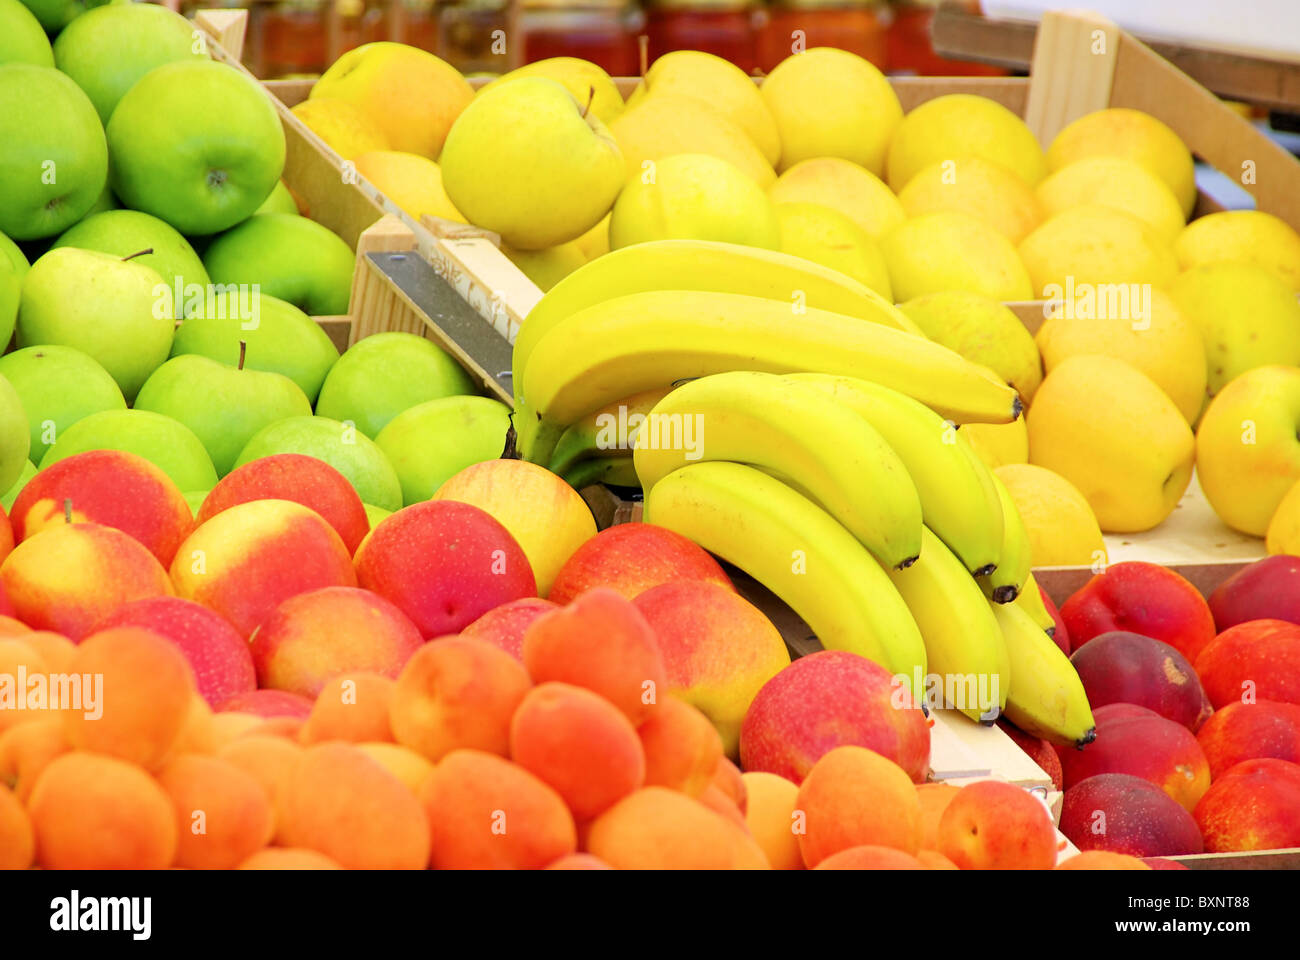 Obstmarkt - fruits du marché 02 Banque D'Images